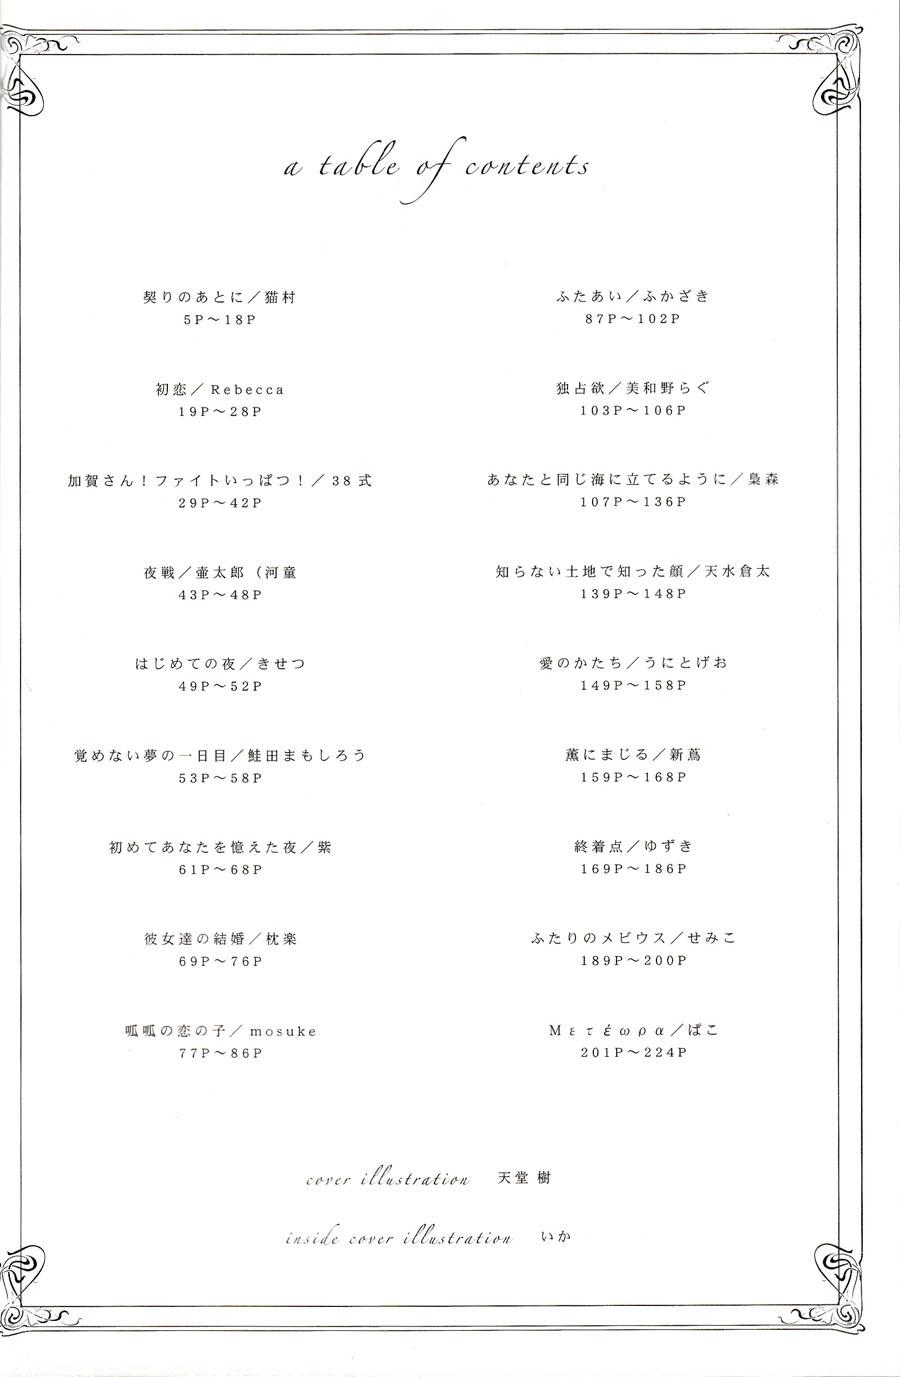 Akagi x Kaga Shinkon Shoya Anthology - 1st bite 4